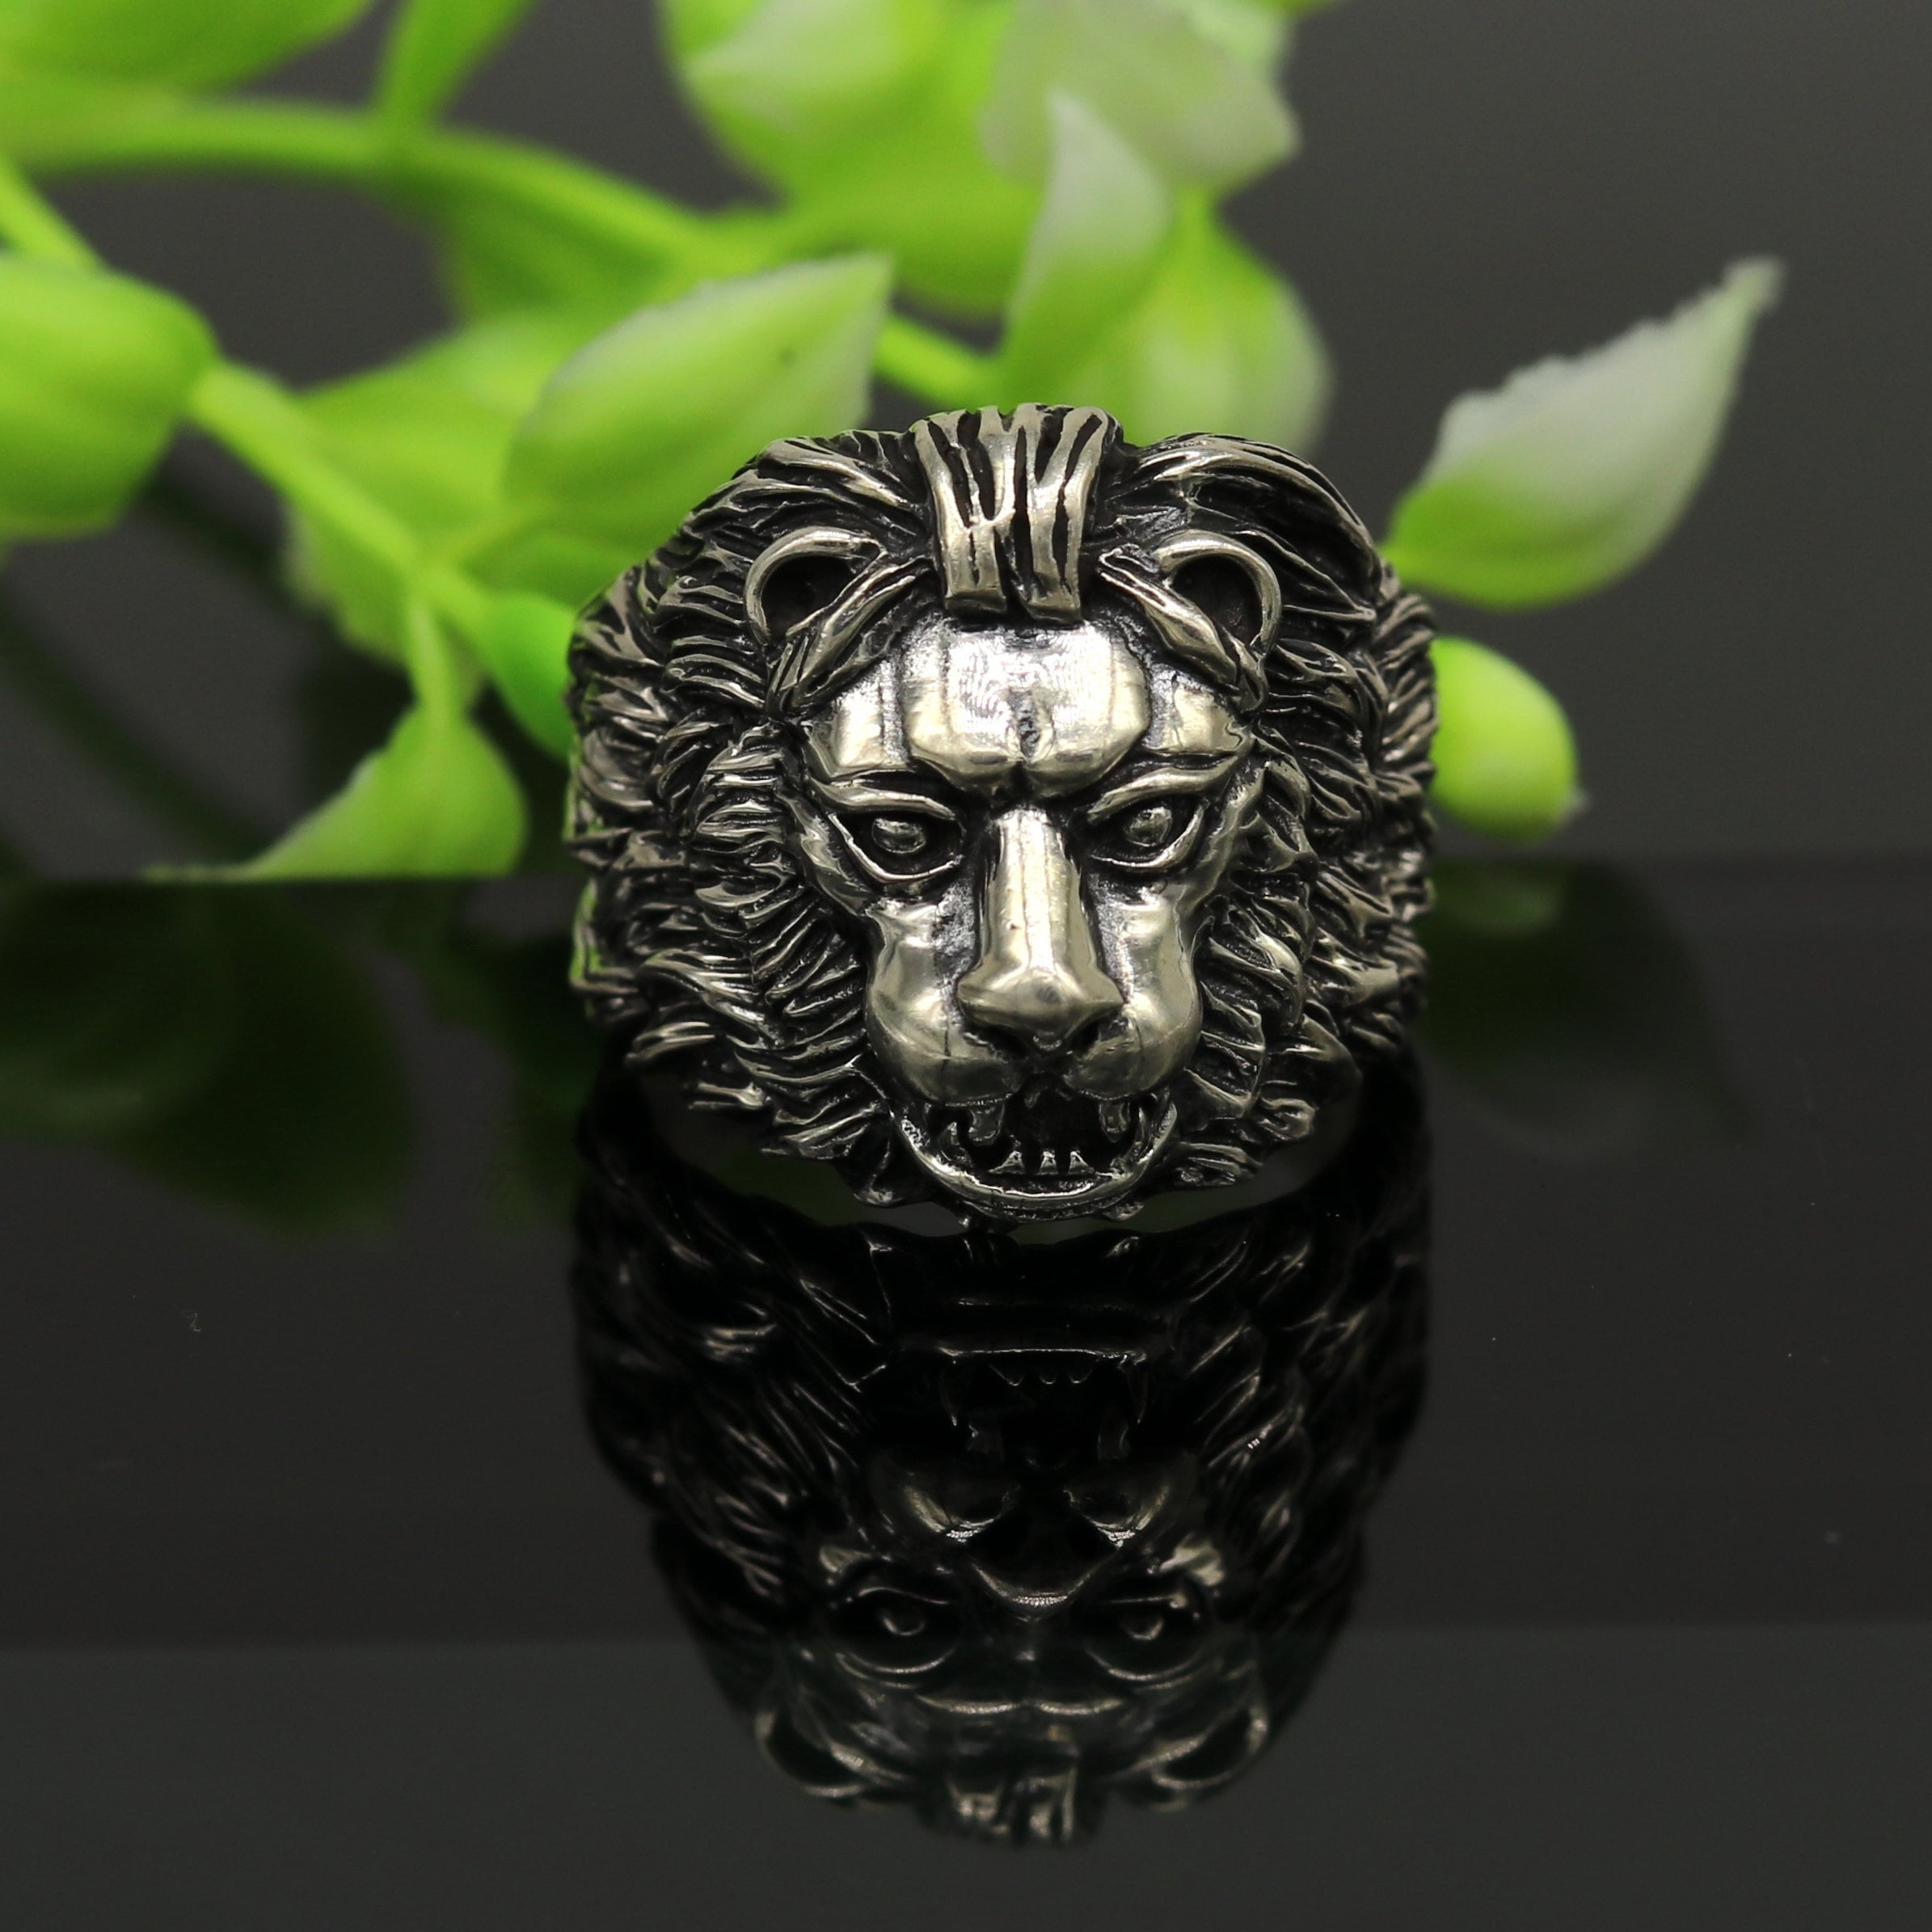 Buy Black & Silver Stainless Steel Lion Head DAD Ring Online - INOX Jewelry  - Inox Jewelry India